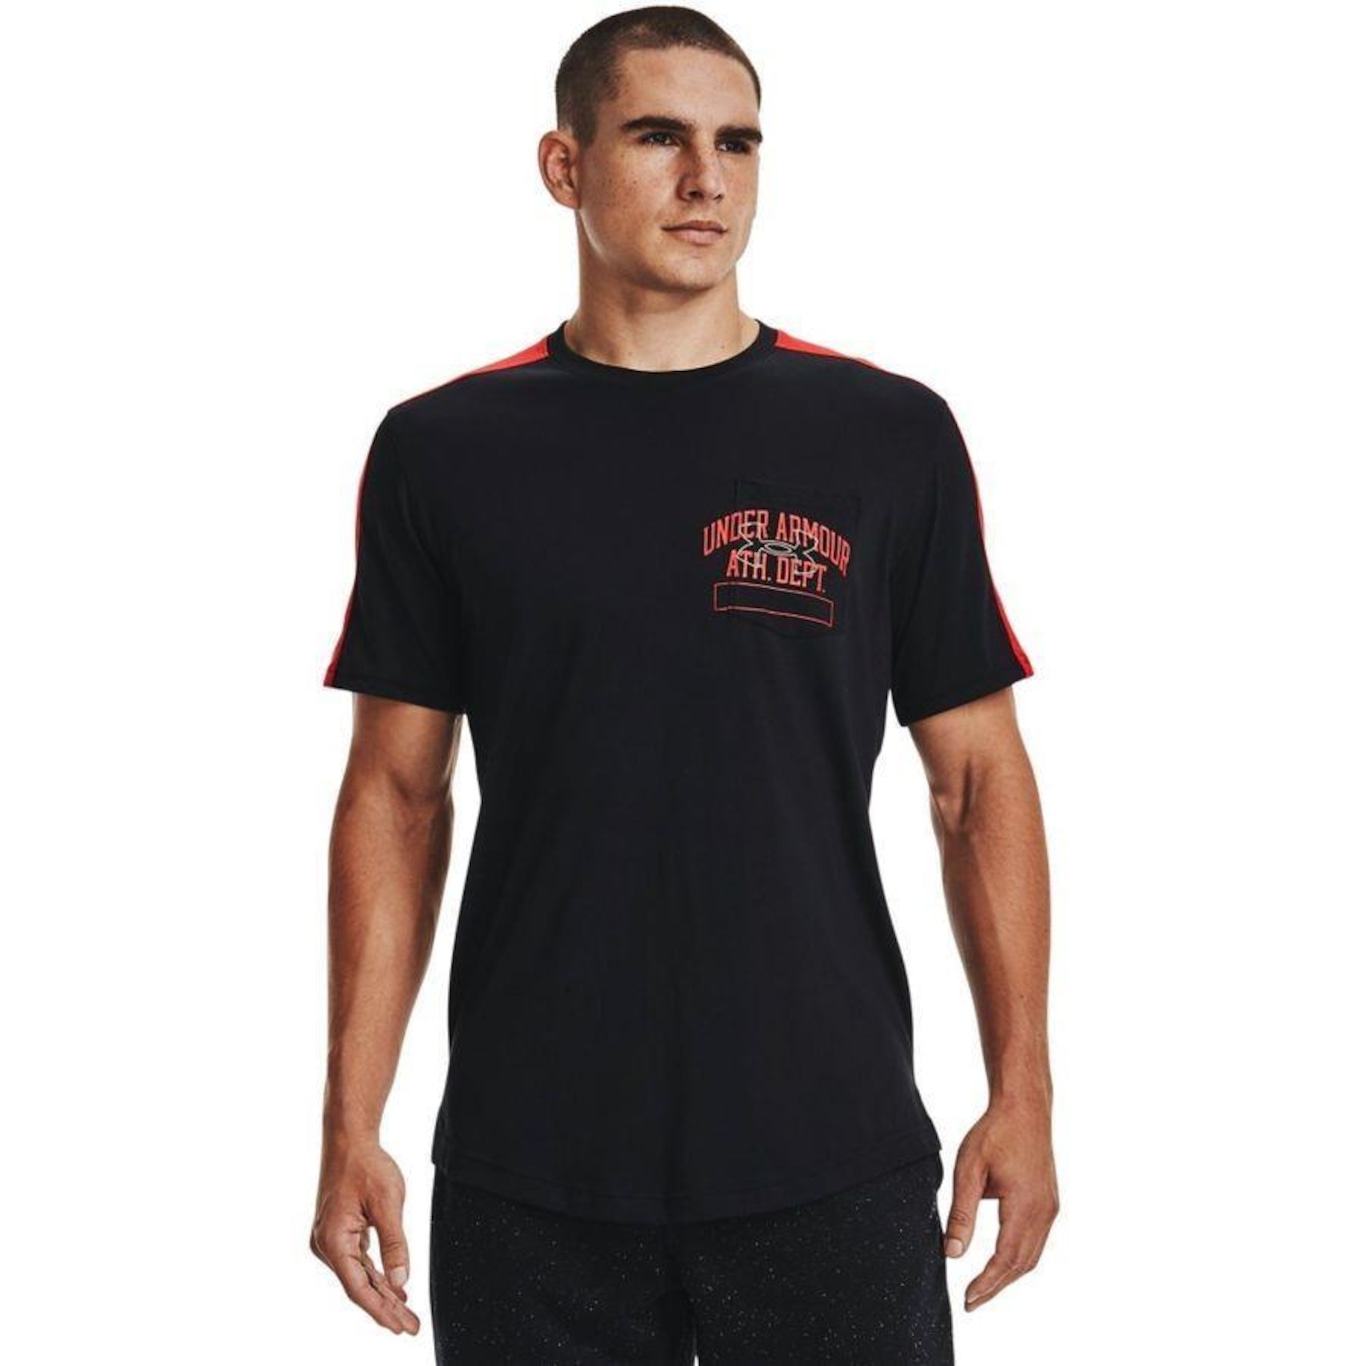 Camiseta Under Armour Athletic Dept Pocket Tee - Masculina